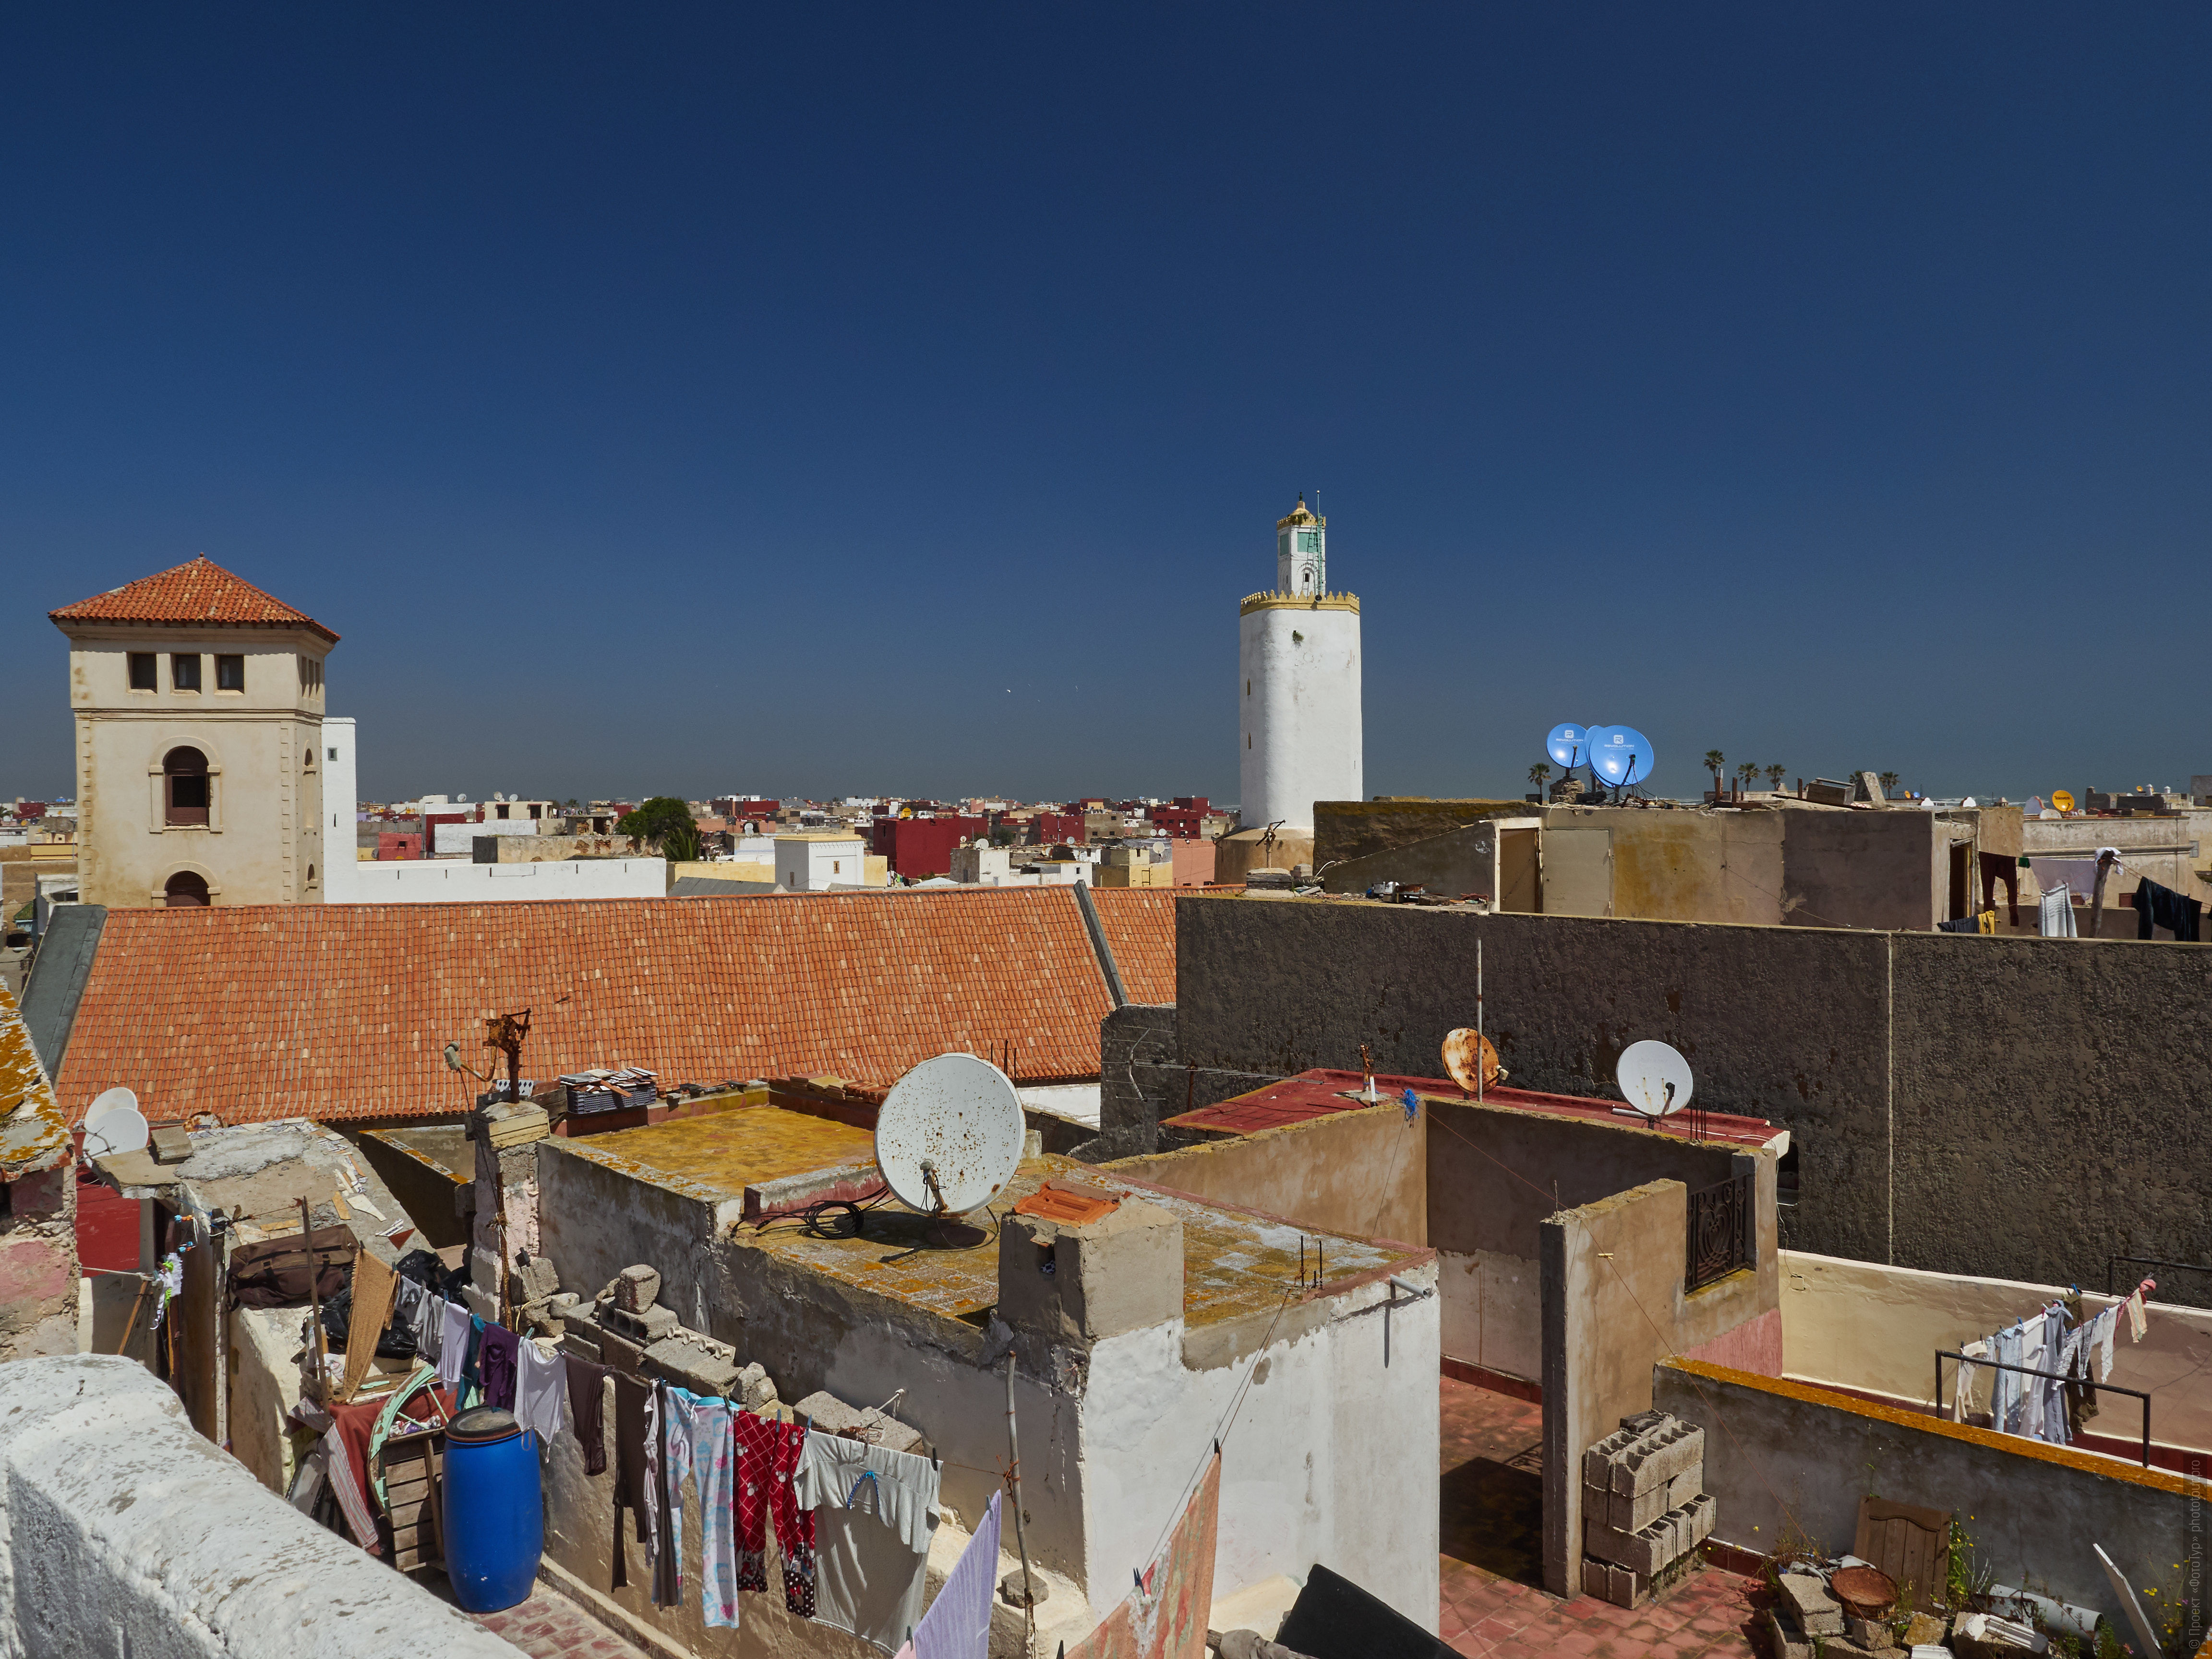 Portuguese medina of El Jadida. Adventure photo tour: medina, cascades, sands and ports of Morocco, April 4 - 17, 2020.